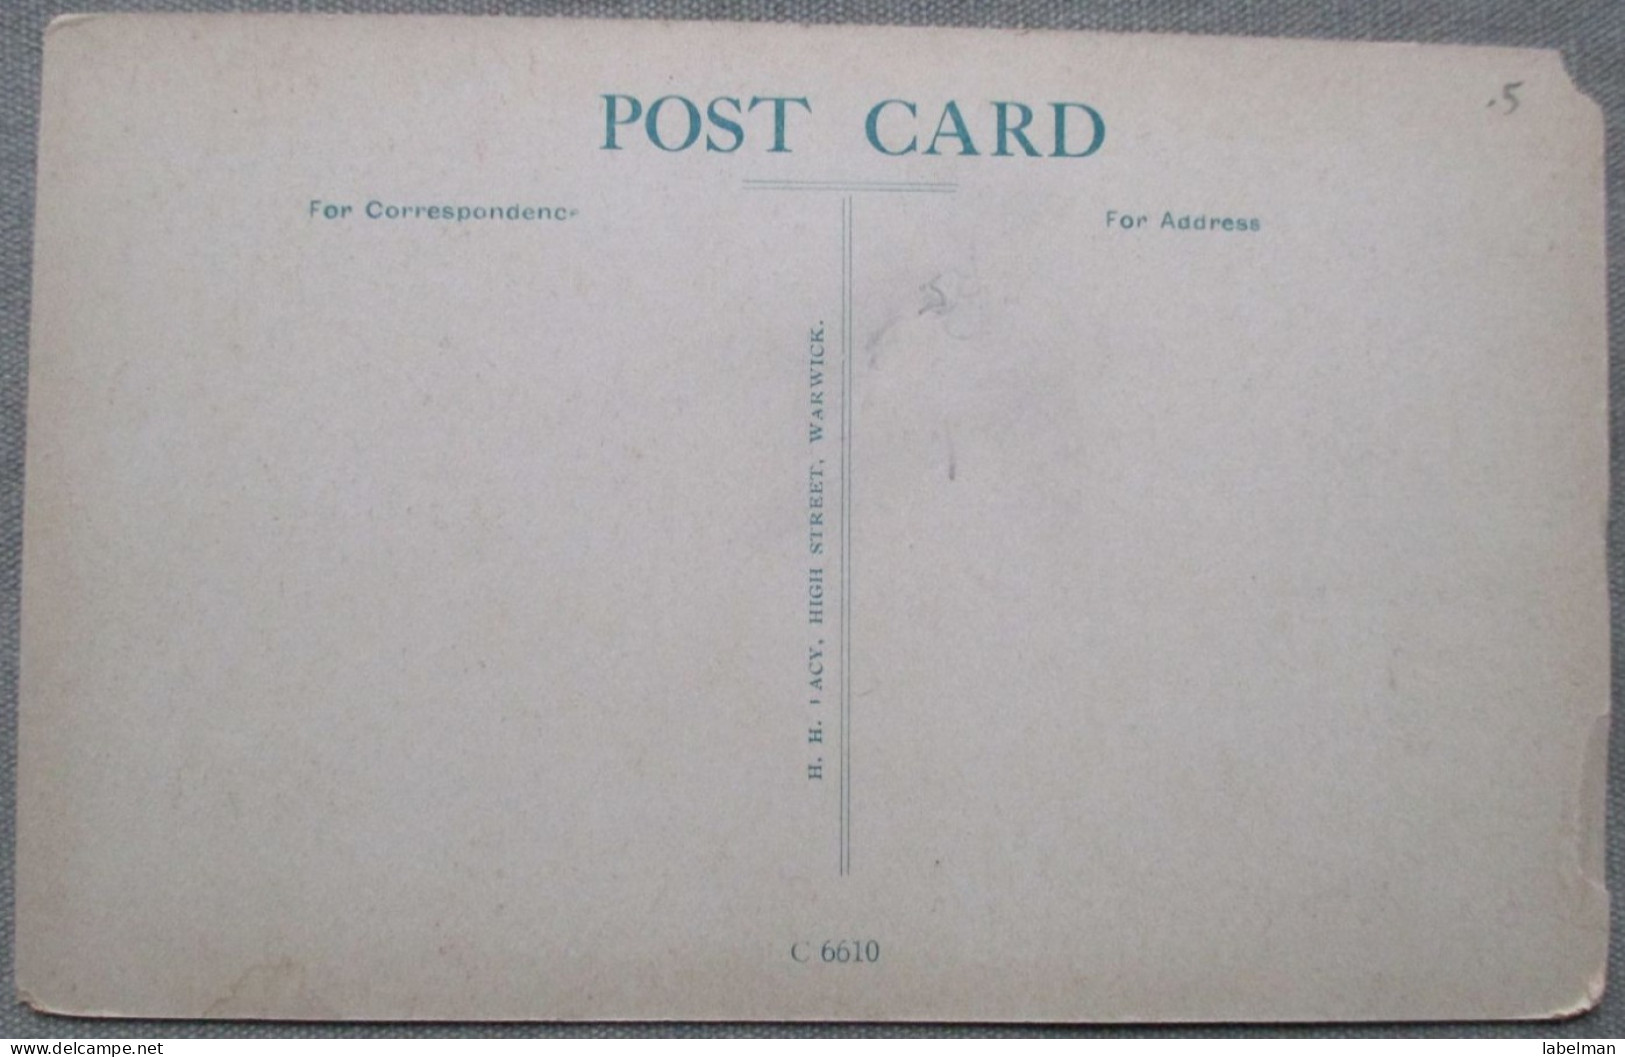 ENGLAND UK UNITED KINGDOM WARWICK SAINT MARY CHURCH KARTE CARD POSTKARTE POSTCARD ANSICHTSKARTE CARTOLINA CARTE POSTALE - Sammlungen & Sammellose